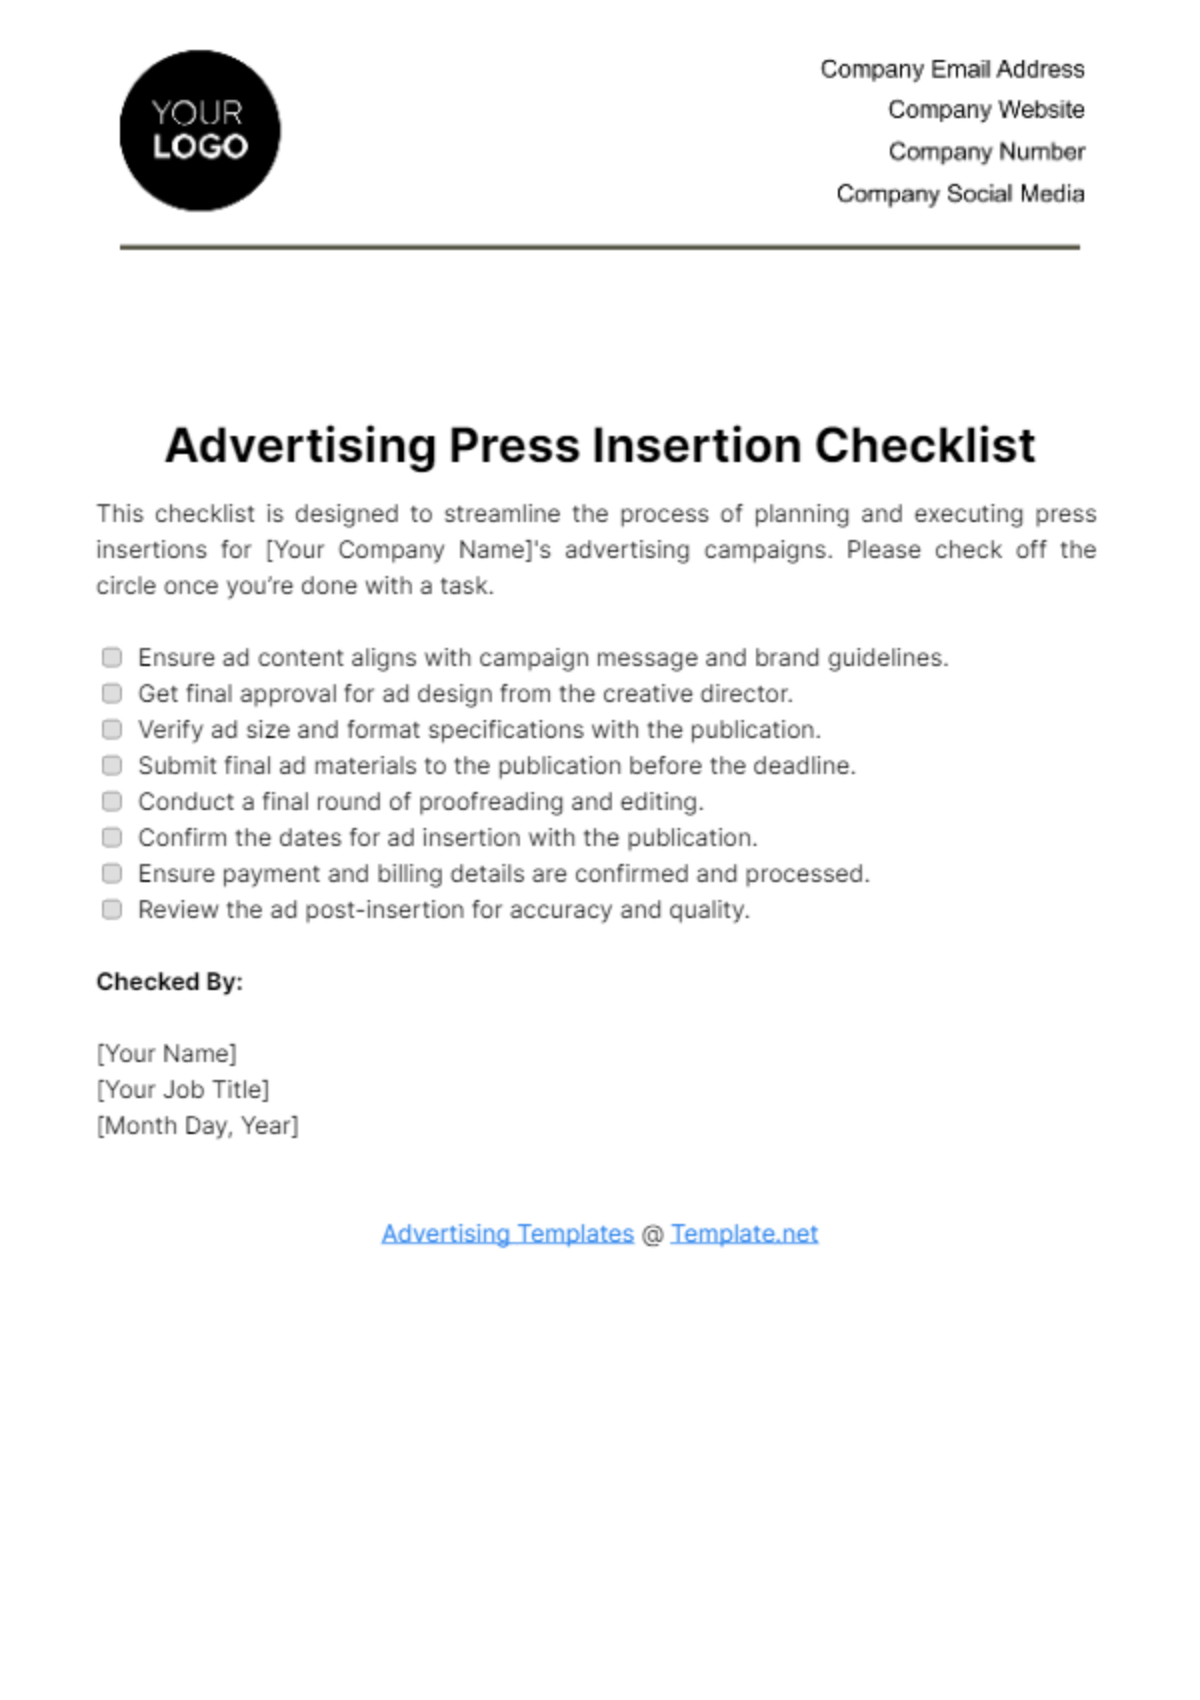 Advertising Press Insertion Checklist Template